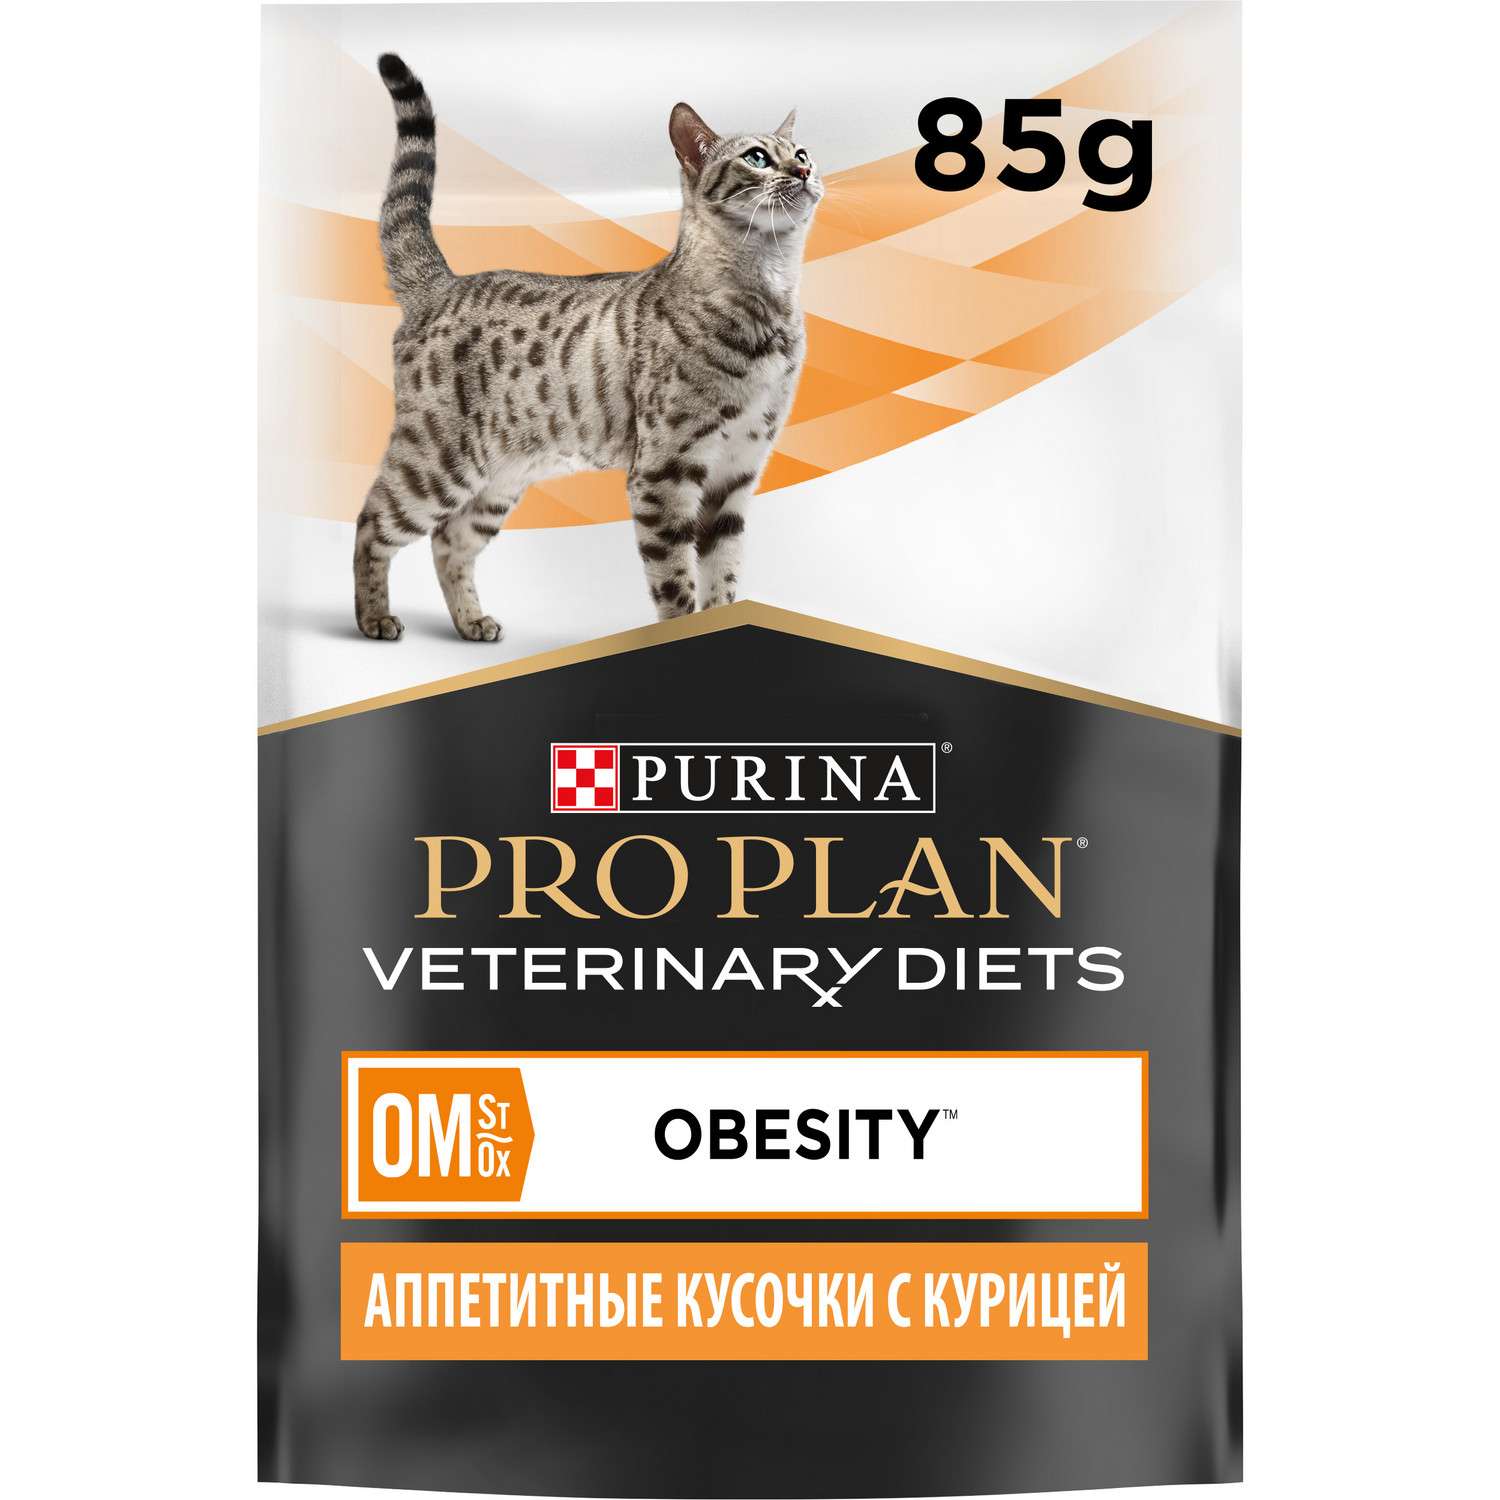 Корм для кошек Purina Pro Plan Veterinary diet 85г OM при избыточной массе тела с курицей - фото 1